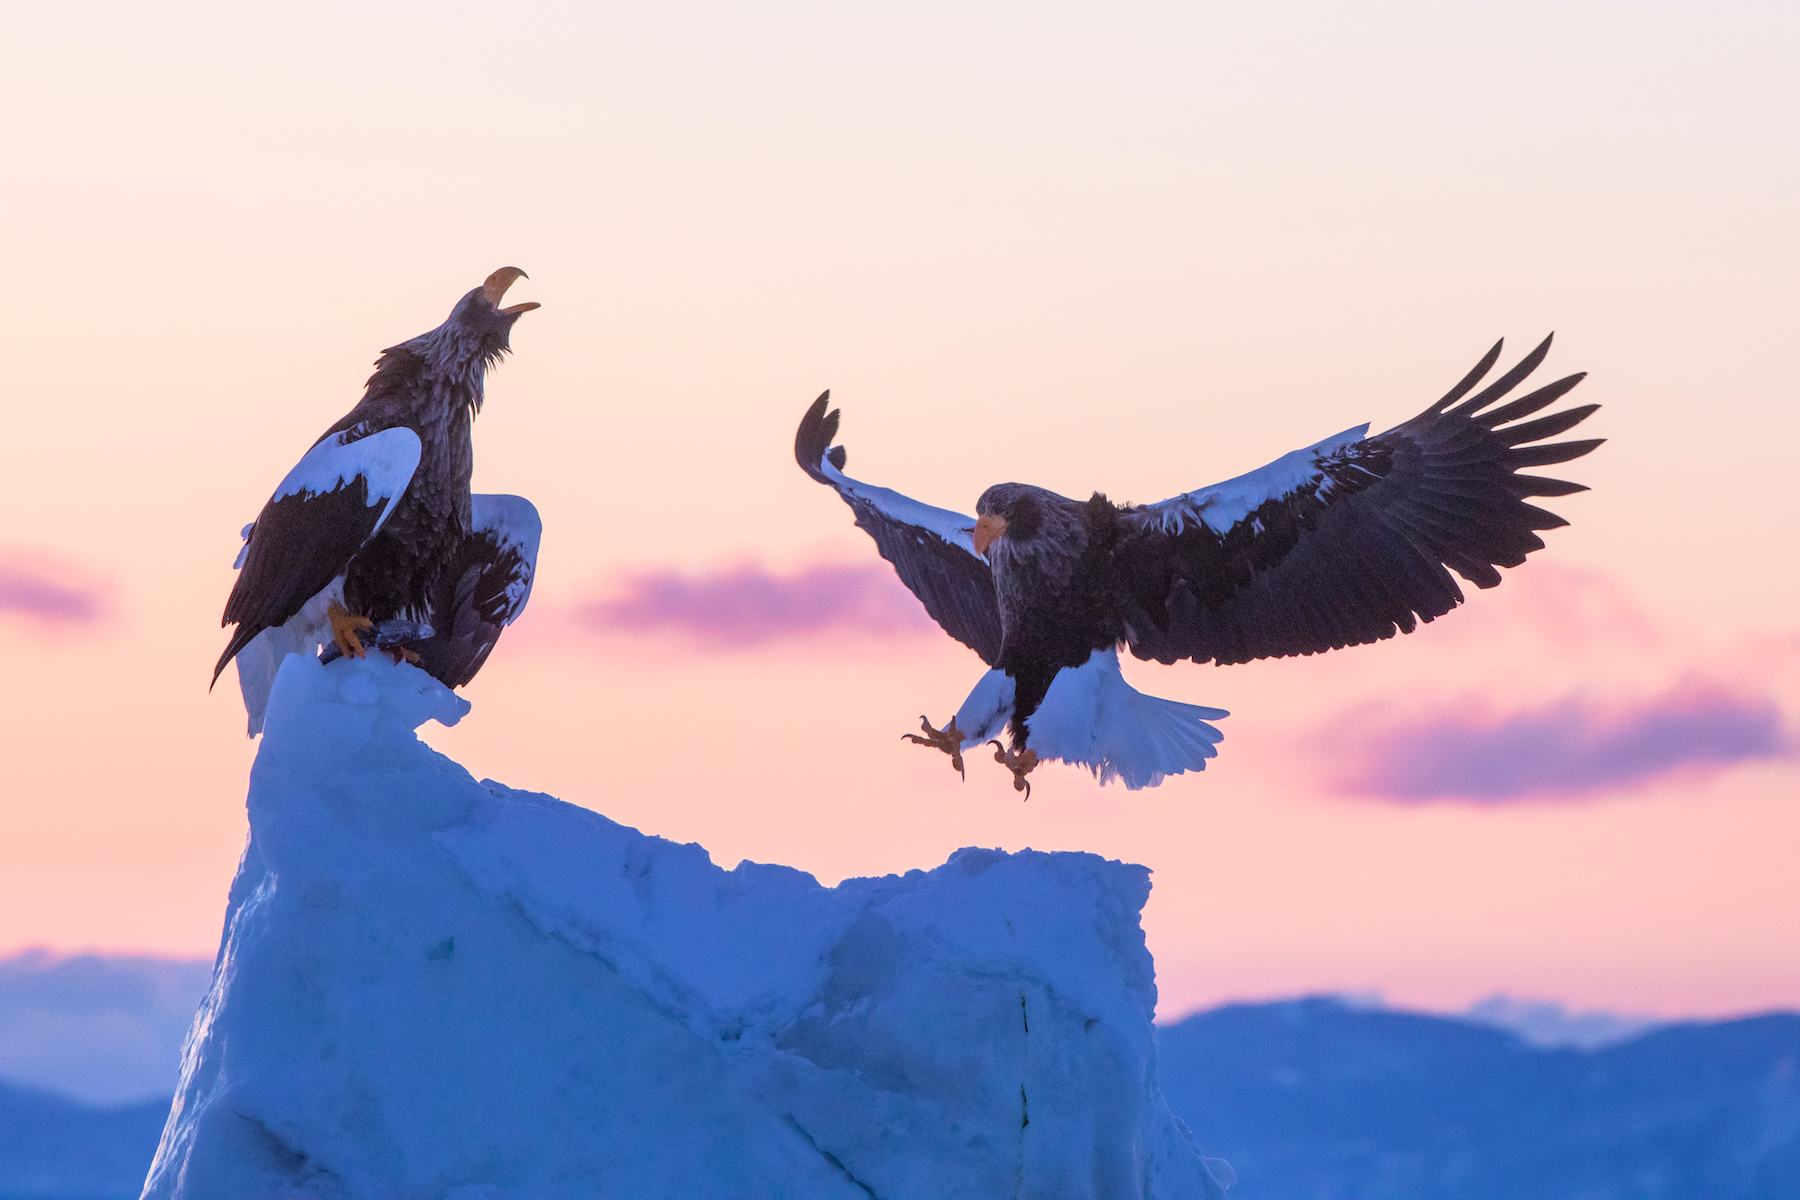 Steller's Sea Eagles in the dawn light of Hokkaido, Japan